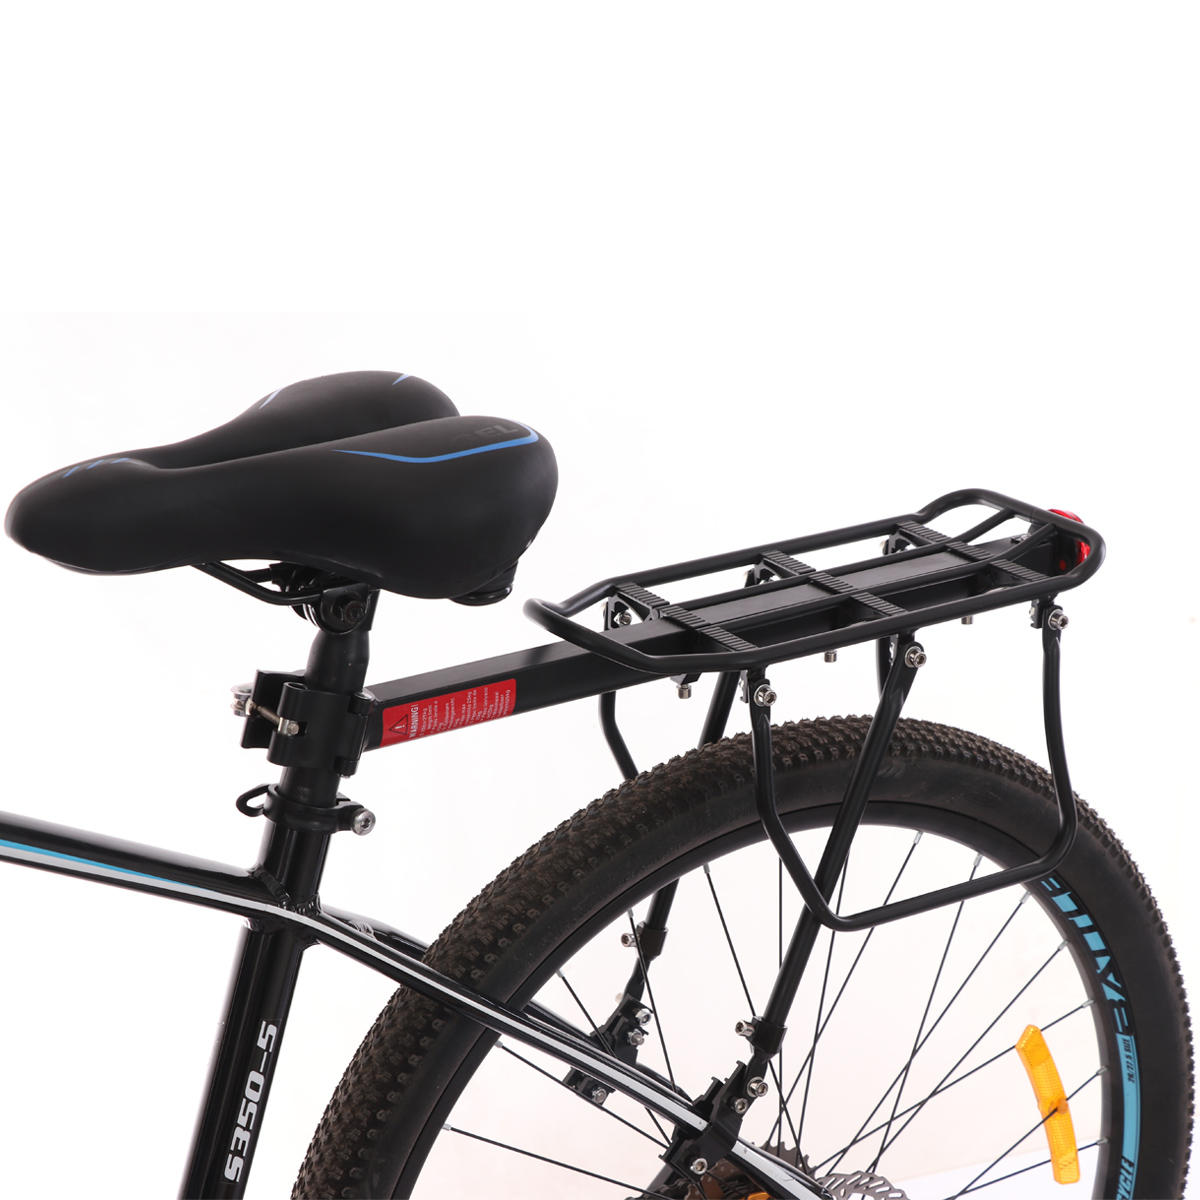 bike seat carrier